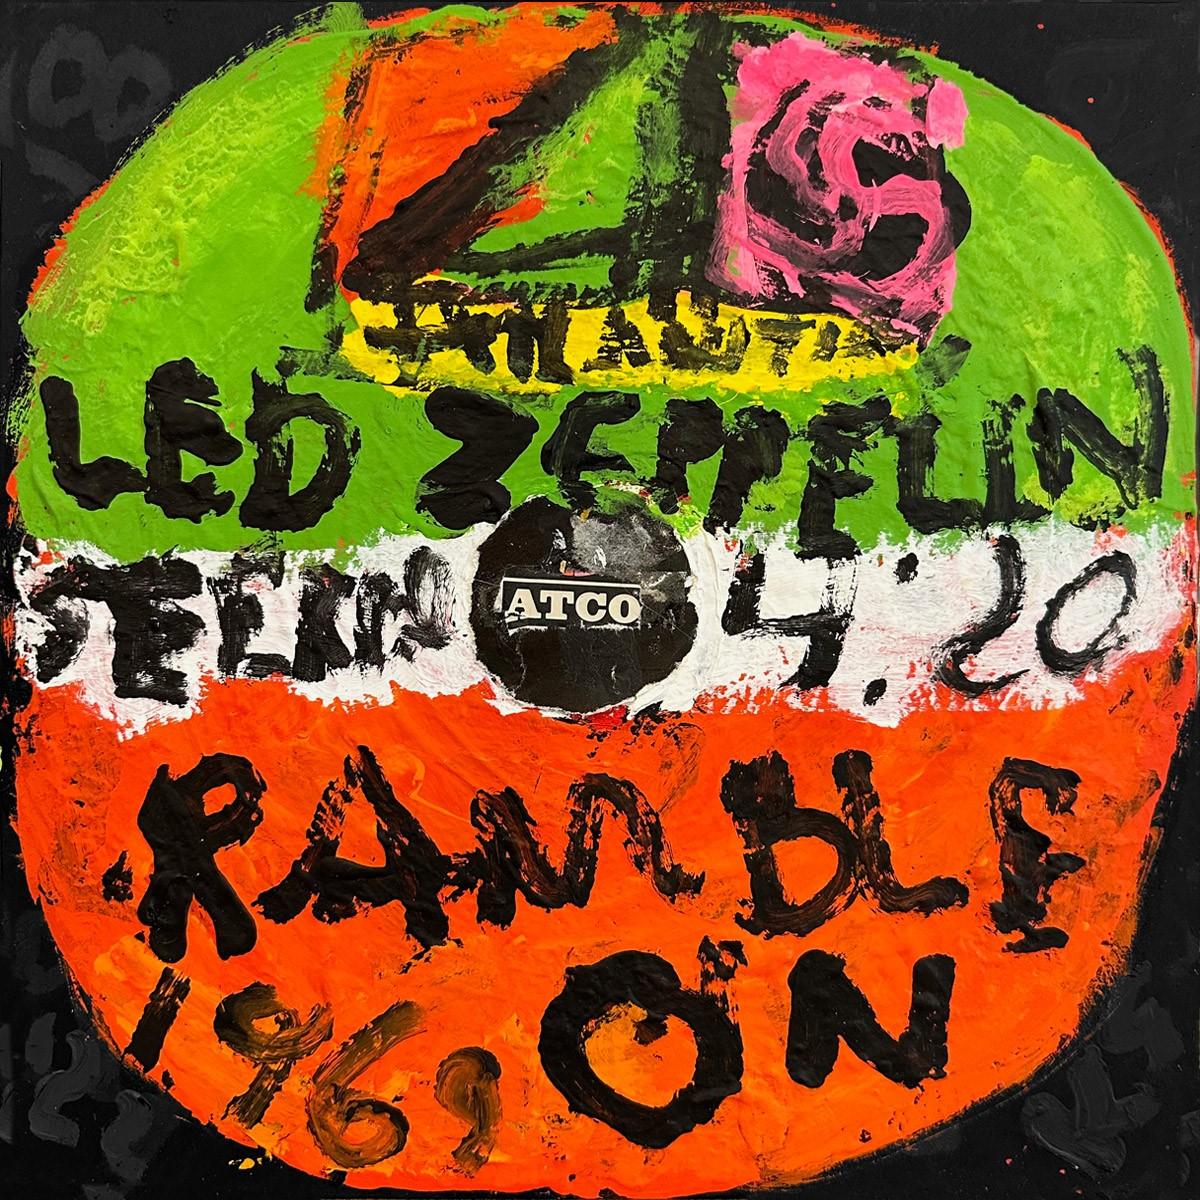 Led Zeppelin - Ramble On (Record Label, Pop Art, Grammy)